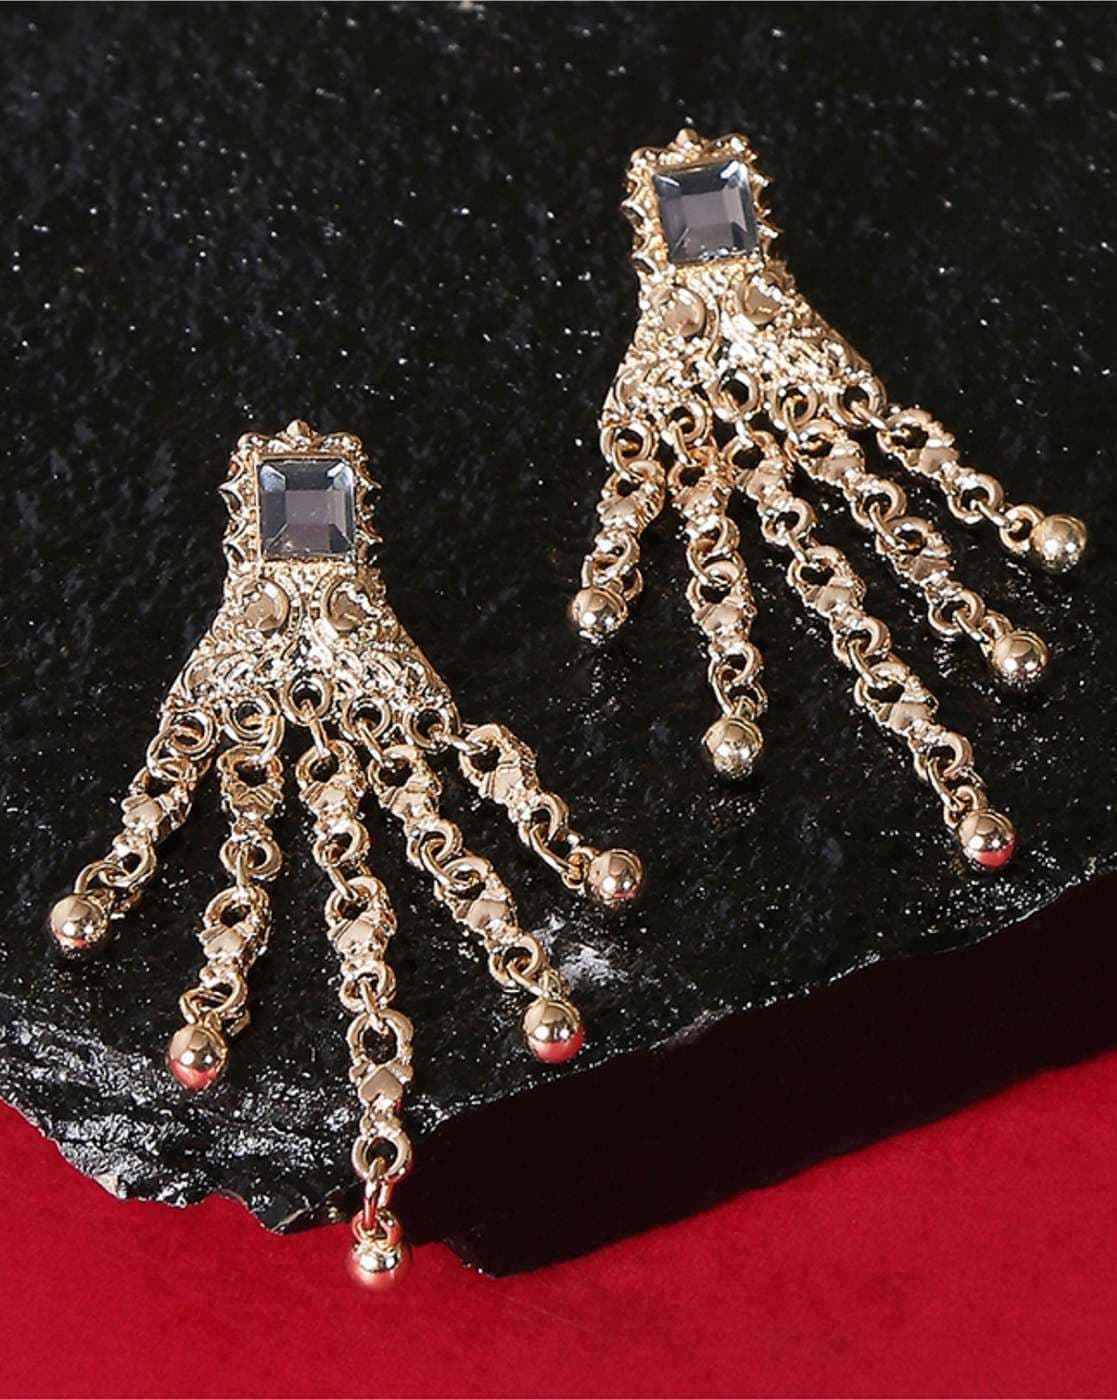 Details more than 152 earrings for grey lehenga latest